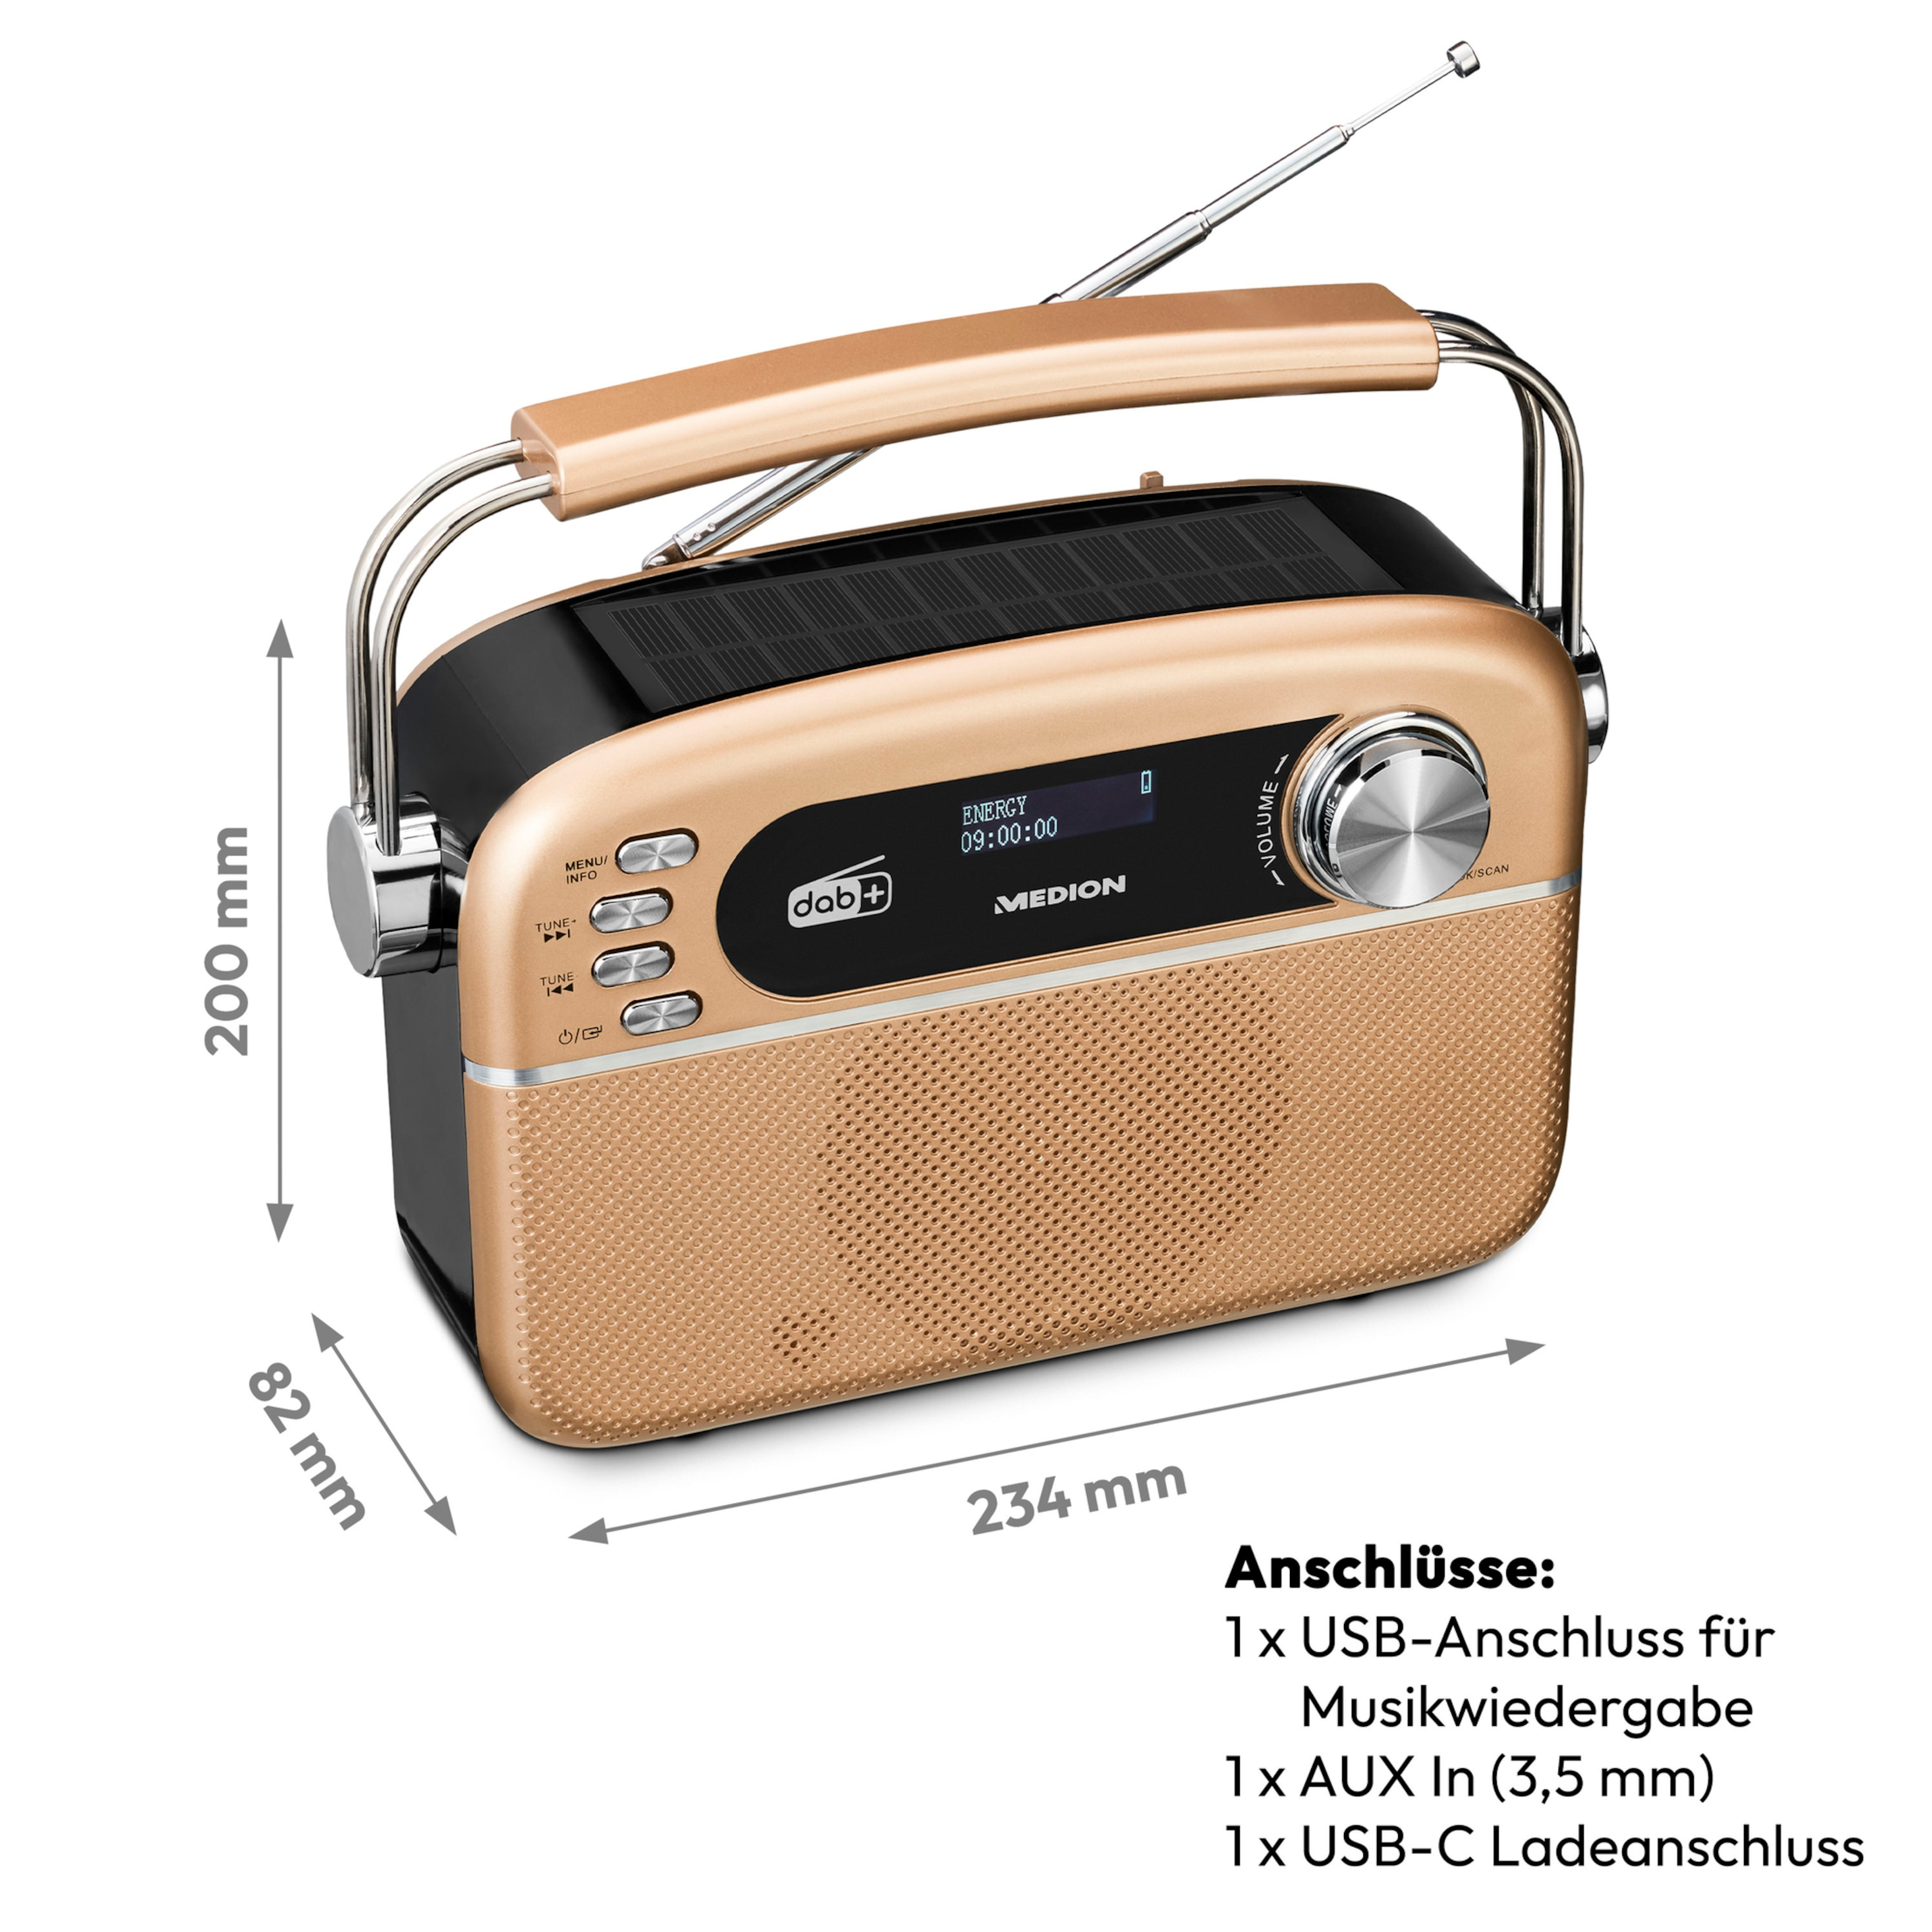 LIFE Retro-Radio, Solarpanel MEDION USB MEDION AUX Retro-Radio KW, gold E66809 Bluetooth gold DAB+/PLL-UKW